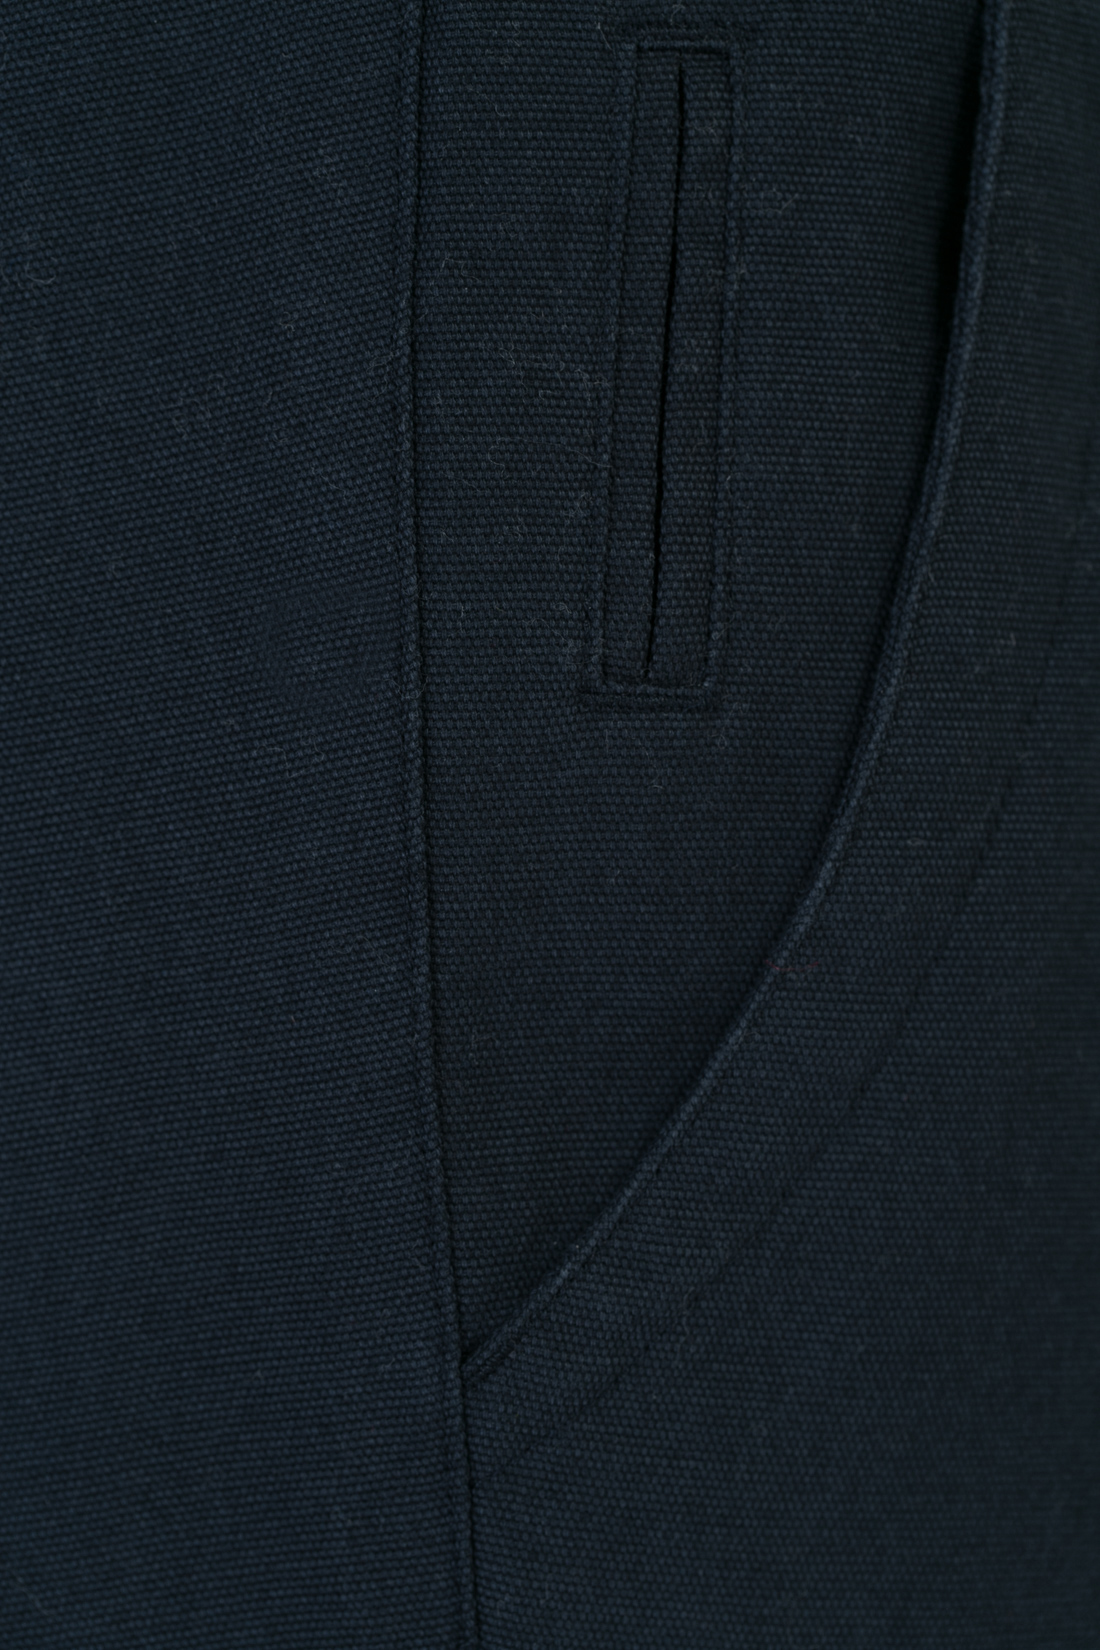 Брюки с карманами на пуговицах (арт. baon B797002), размер XXL, цвет синий Брюки с карманами на пуговицах (арт. baon B797002) - фото 3